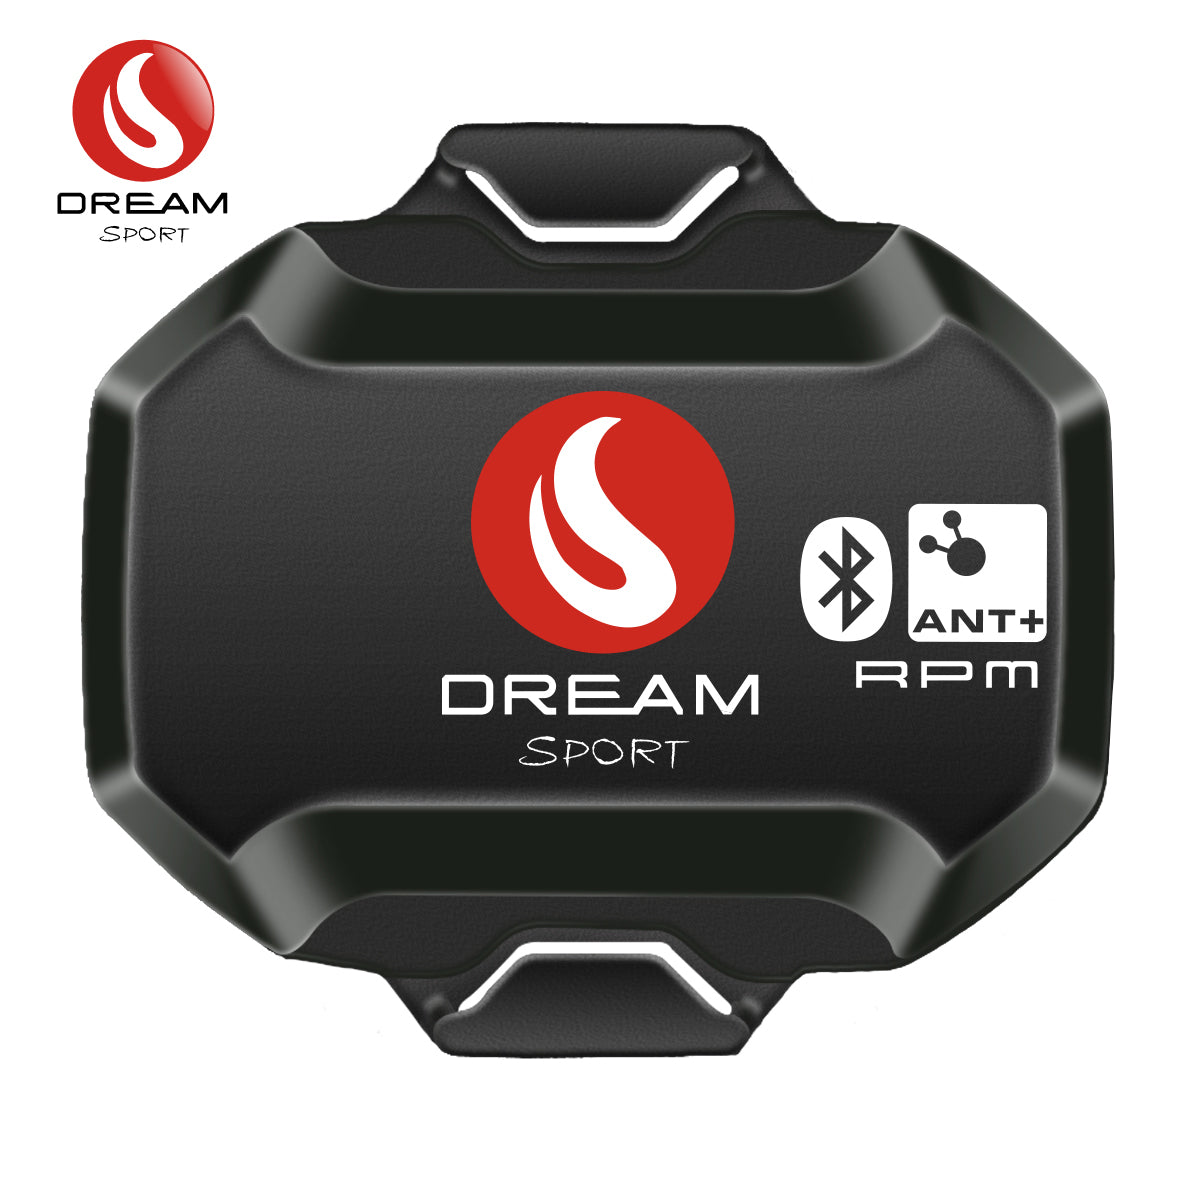 DREAM SPORT Cadence Sensor RPM Wireless Magnetless